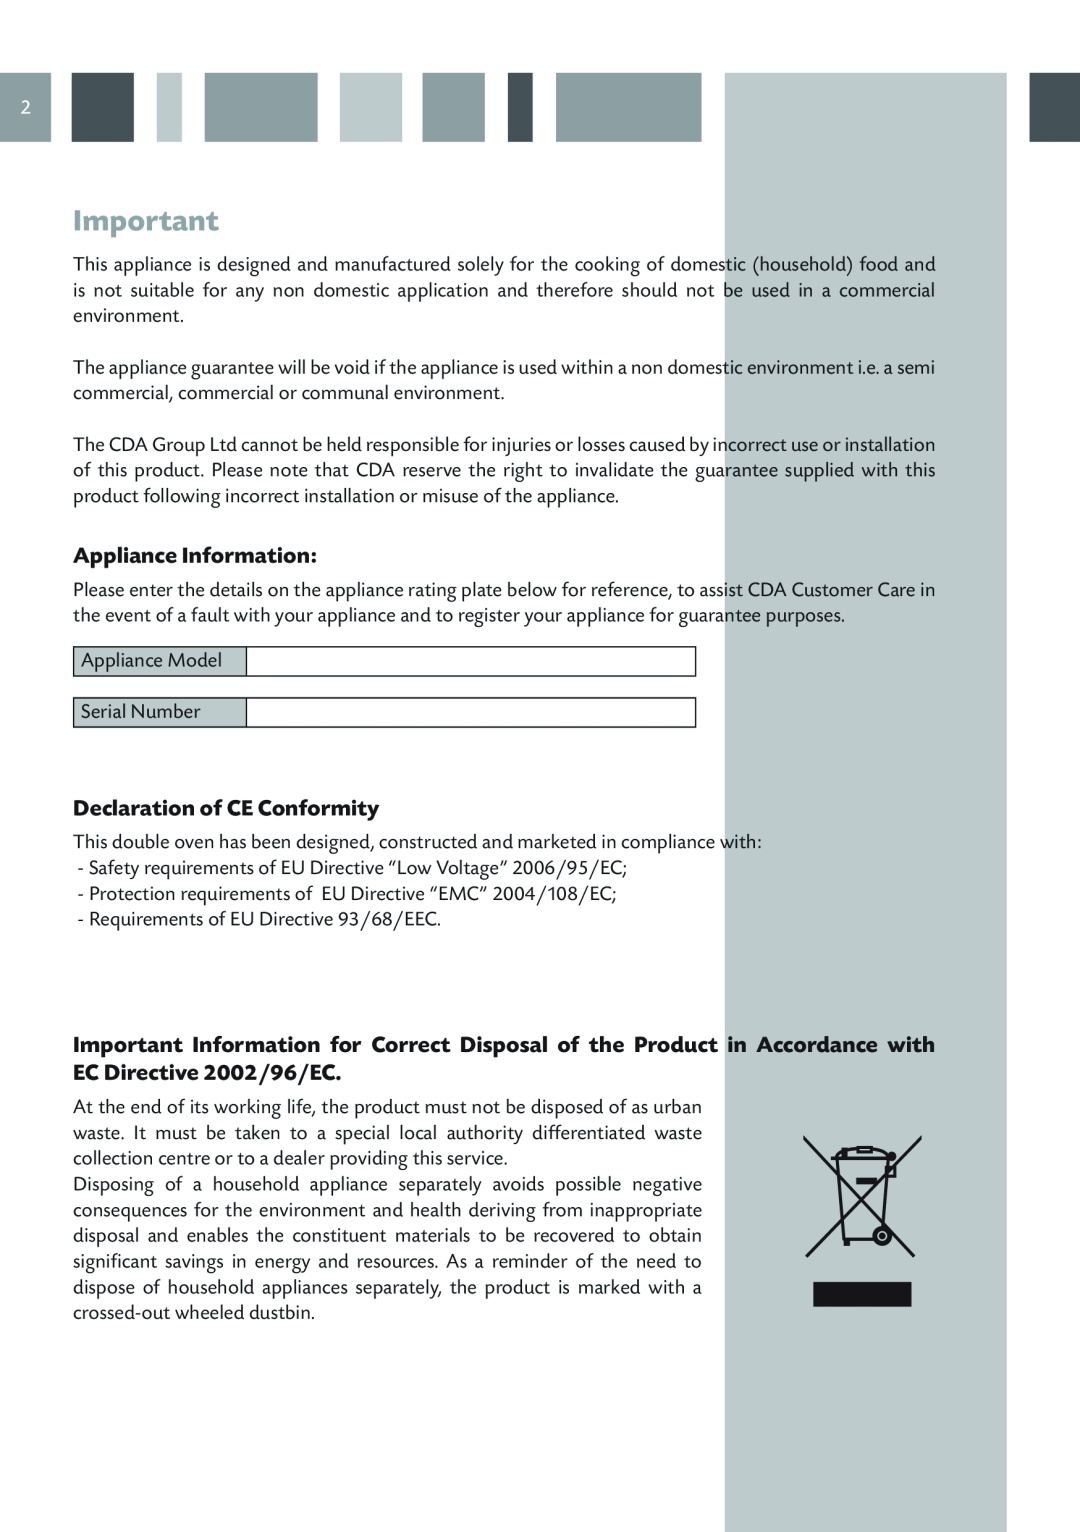 CDA DC930 manual Appliance Information, Declaration of CE Conformity 